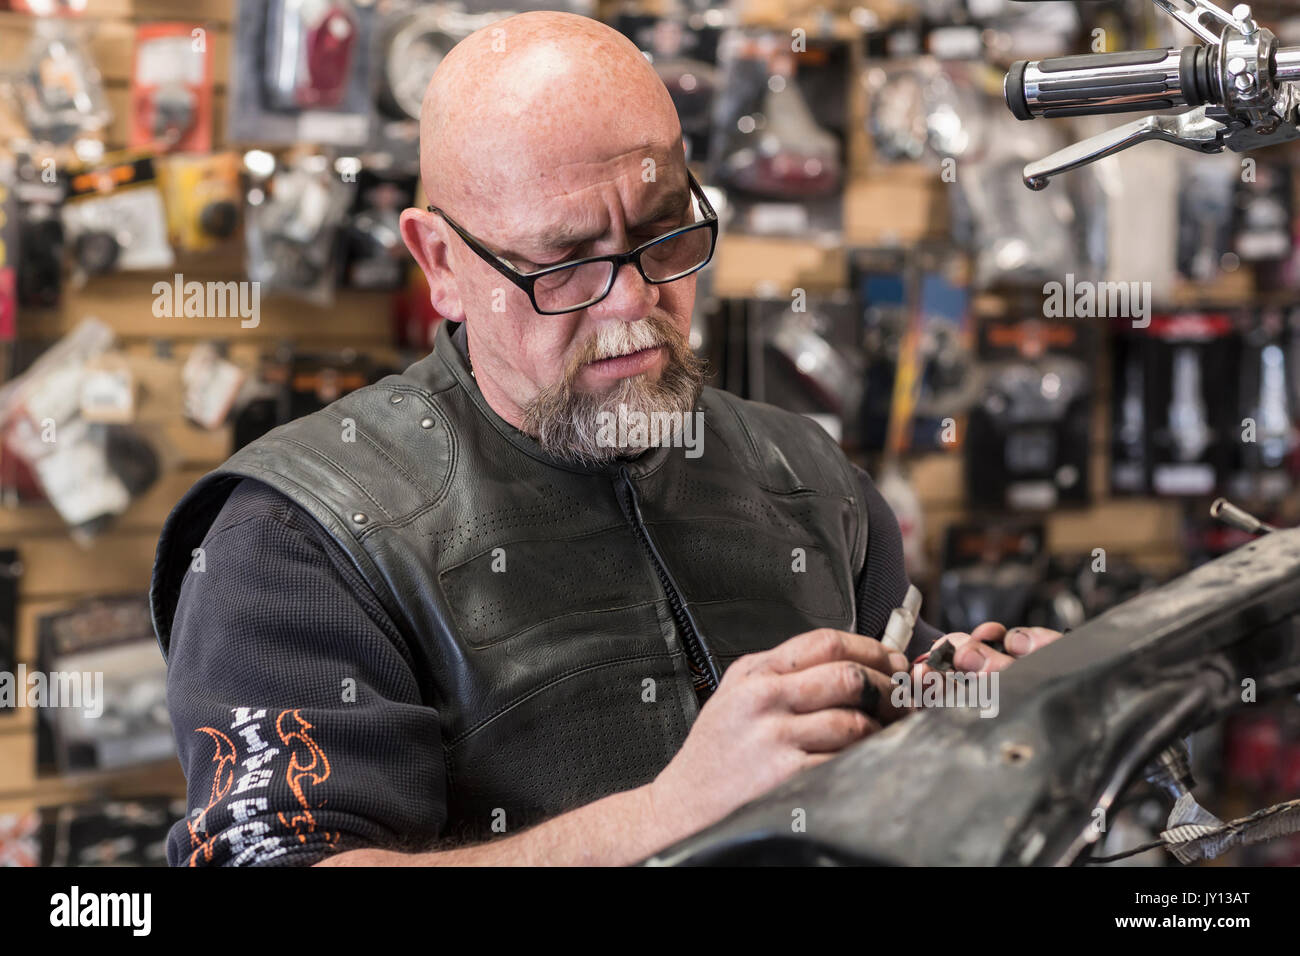 Caucasian man repairing motorcycle Stock Photo